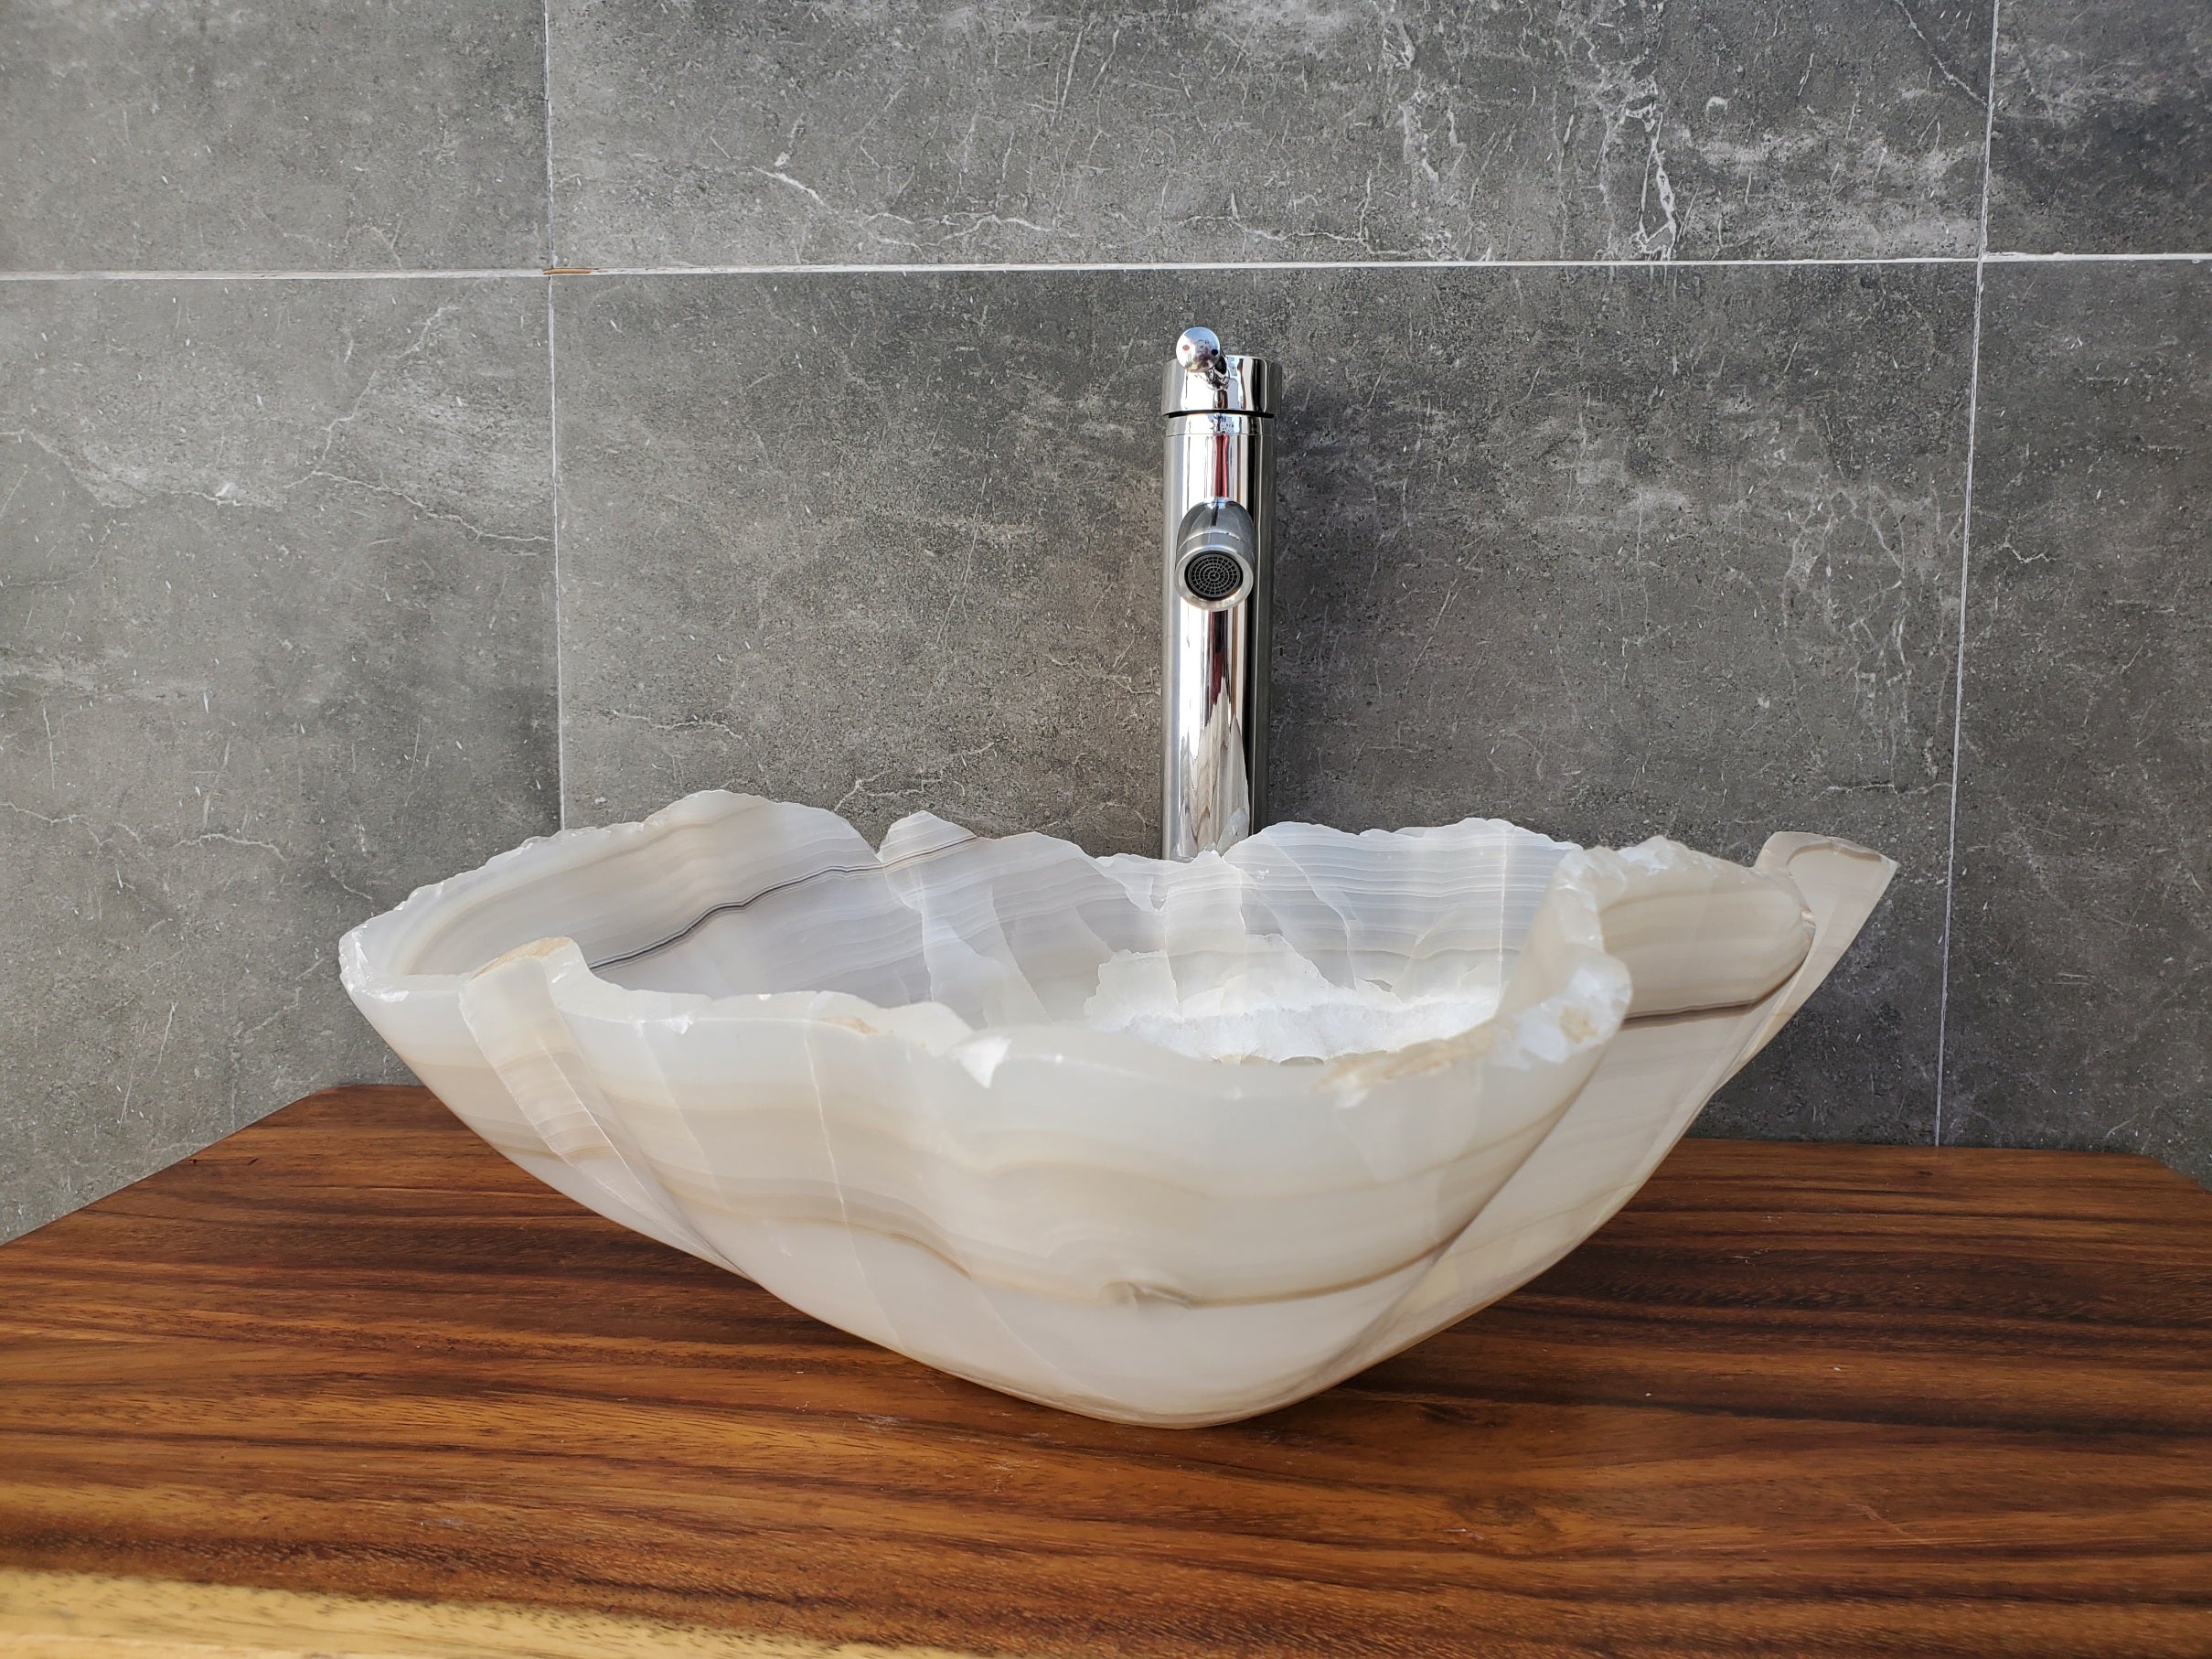 Transparent Onyx Stone Bathroom Vessel Sink. Epoxy Sealant is available Fast shipping. Standard drain size. A beautiful work of art. Handmade. Buy Now at www.felipeandgrace.com.